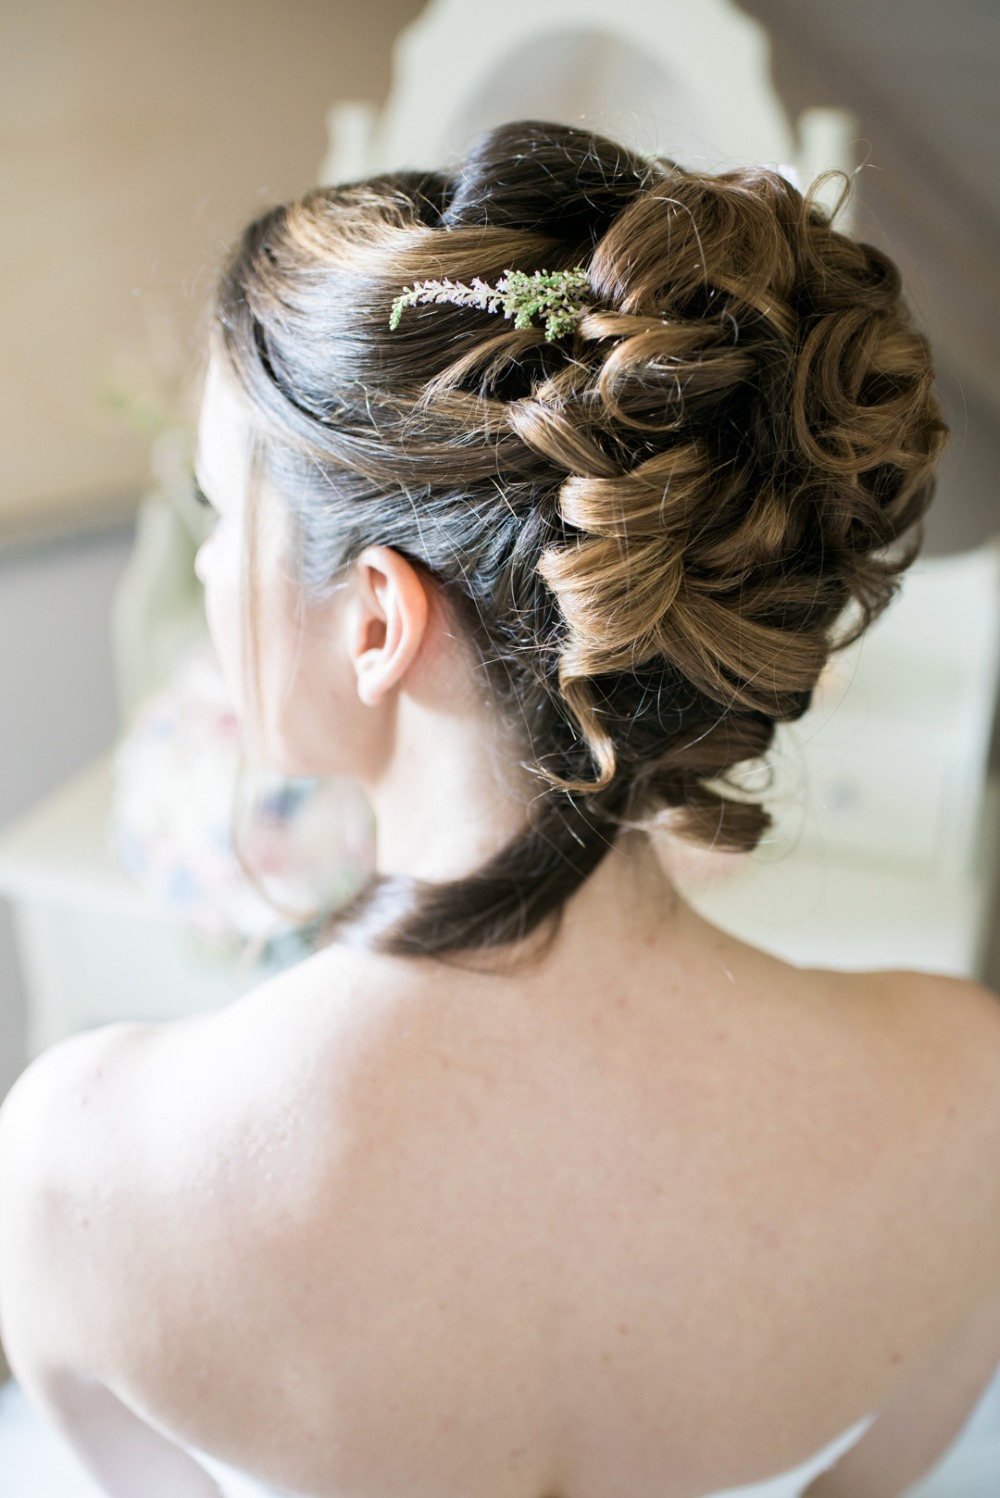 beautiful wedding hair updo idea